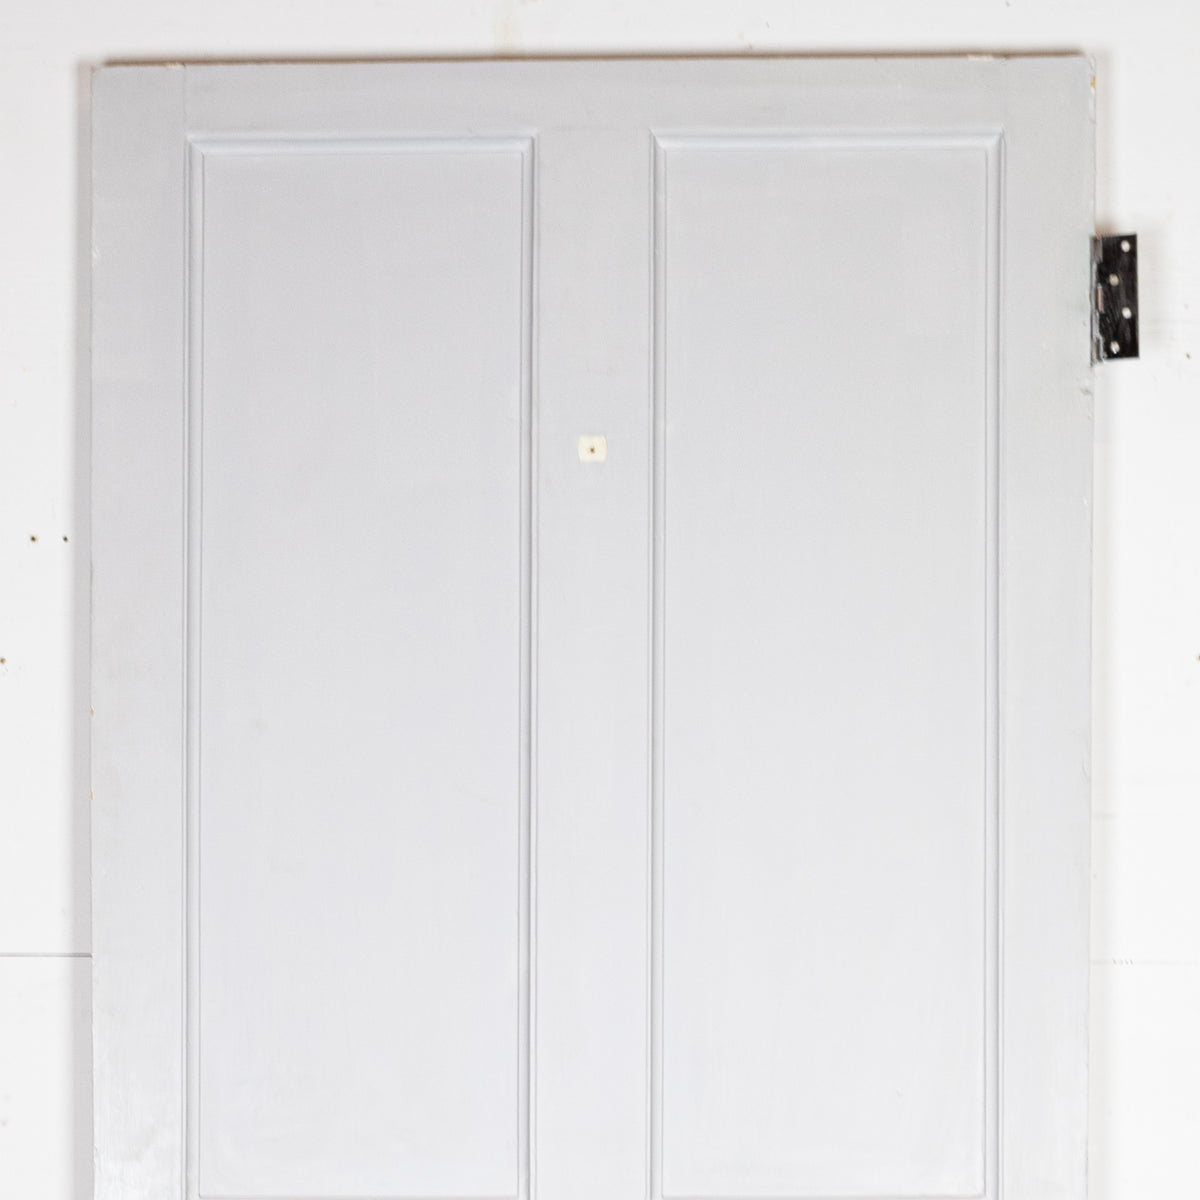 Antique Victorian 4 Panel Door - 195 x 89.5cm | The Architectural Forum